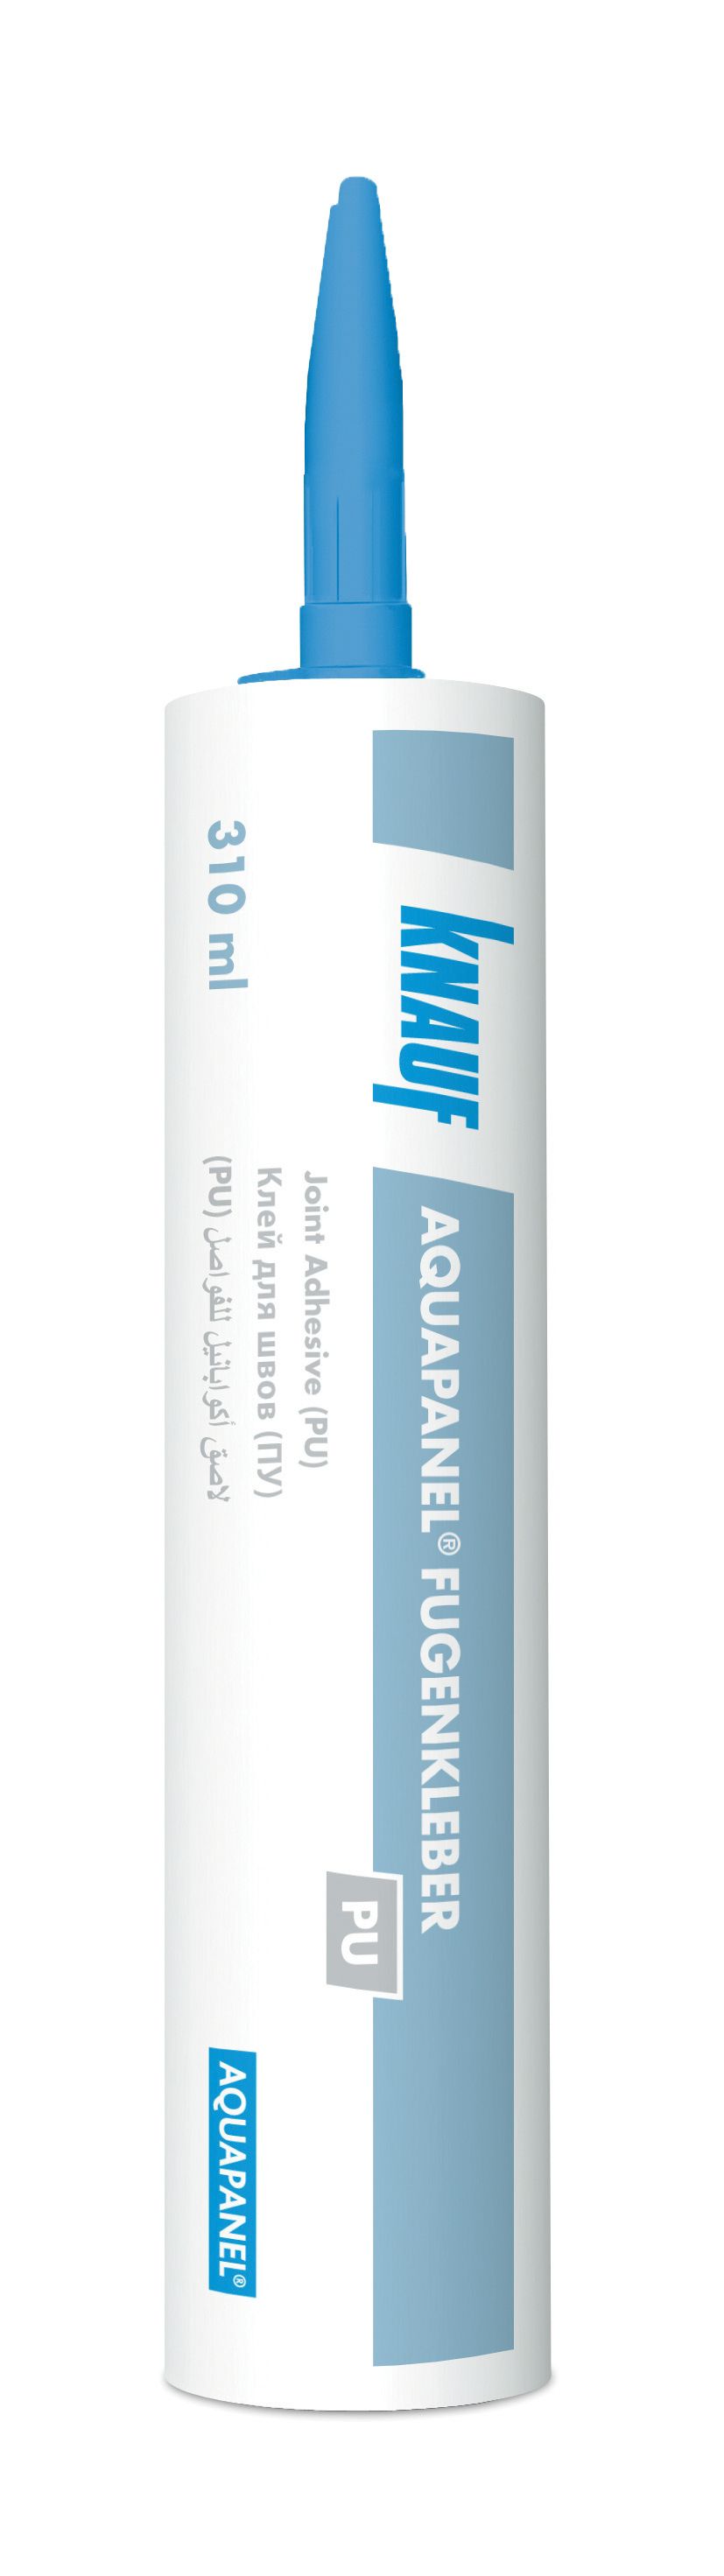 Image of Knauf Aquapanel Joint Adhesive - Grey 310ml